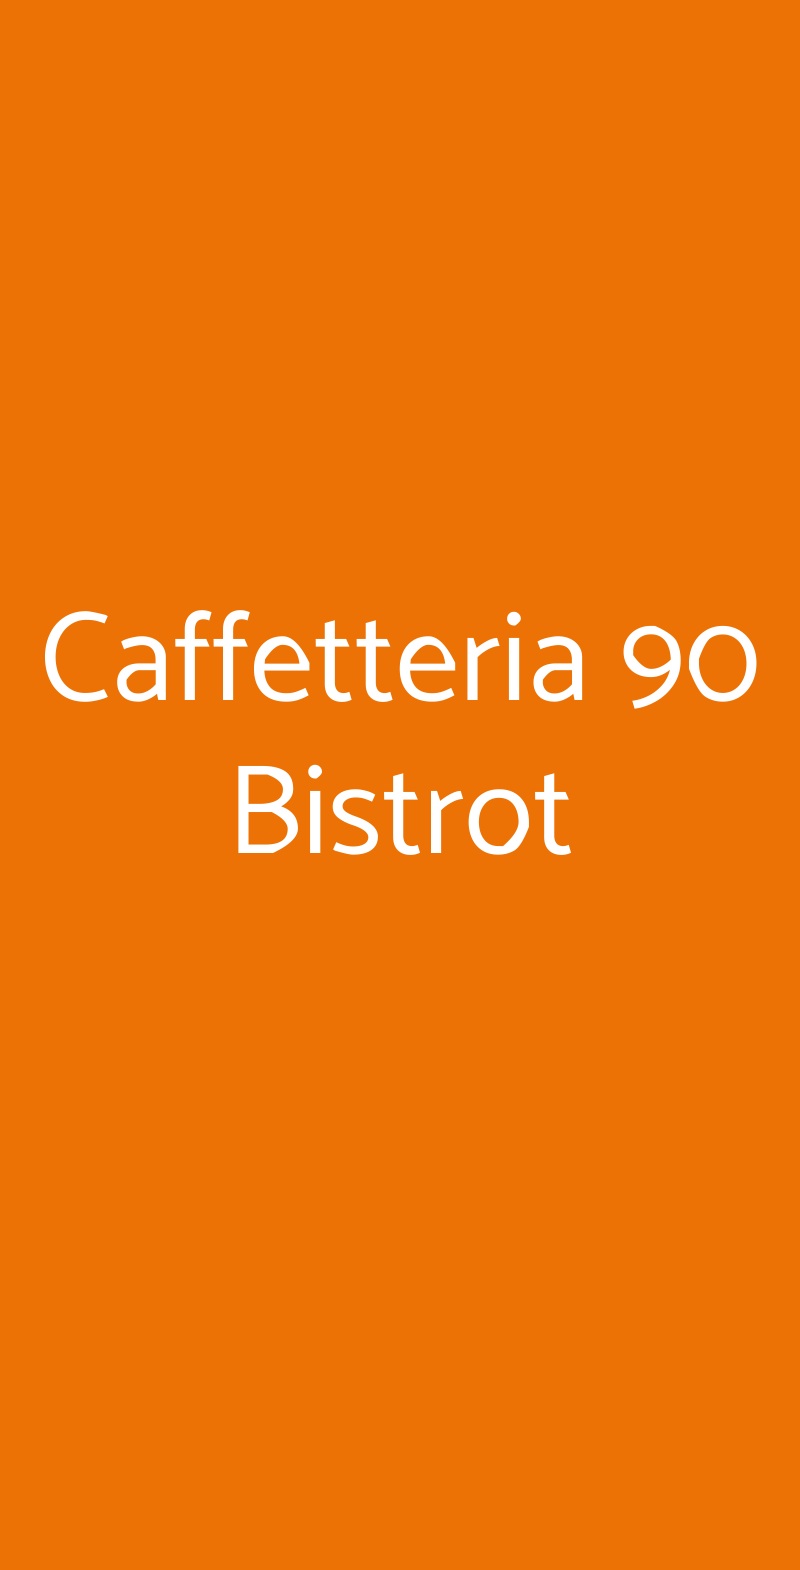 Caffetteria 90 Bistrot Napoli menù 1 pagina